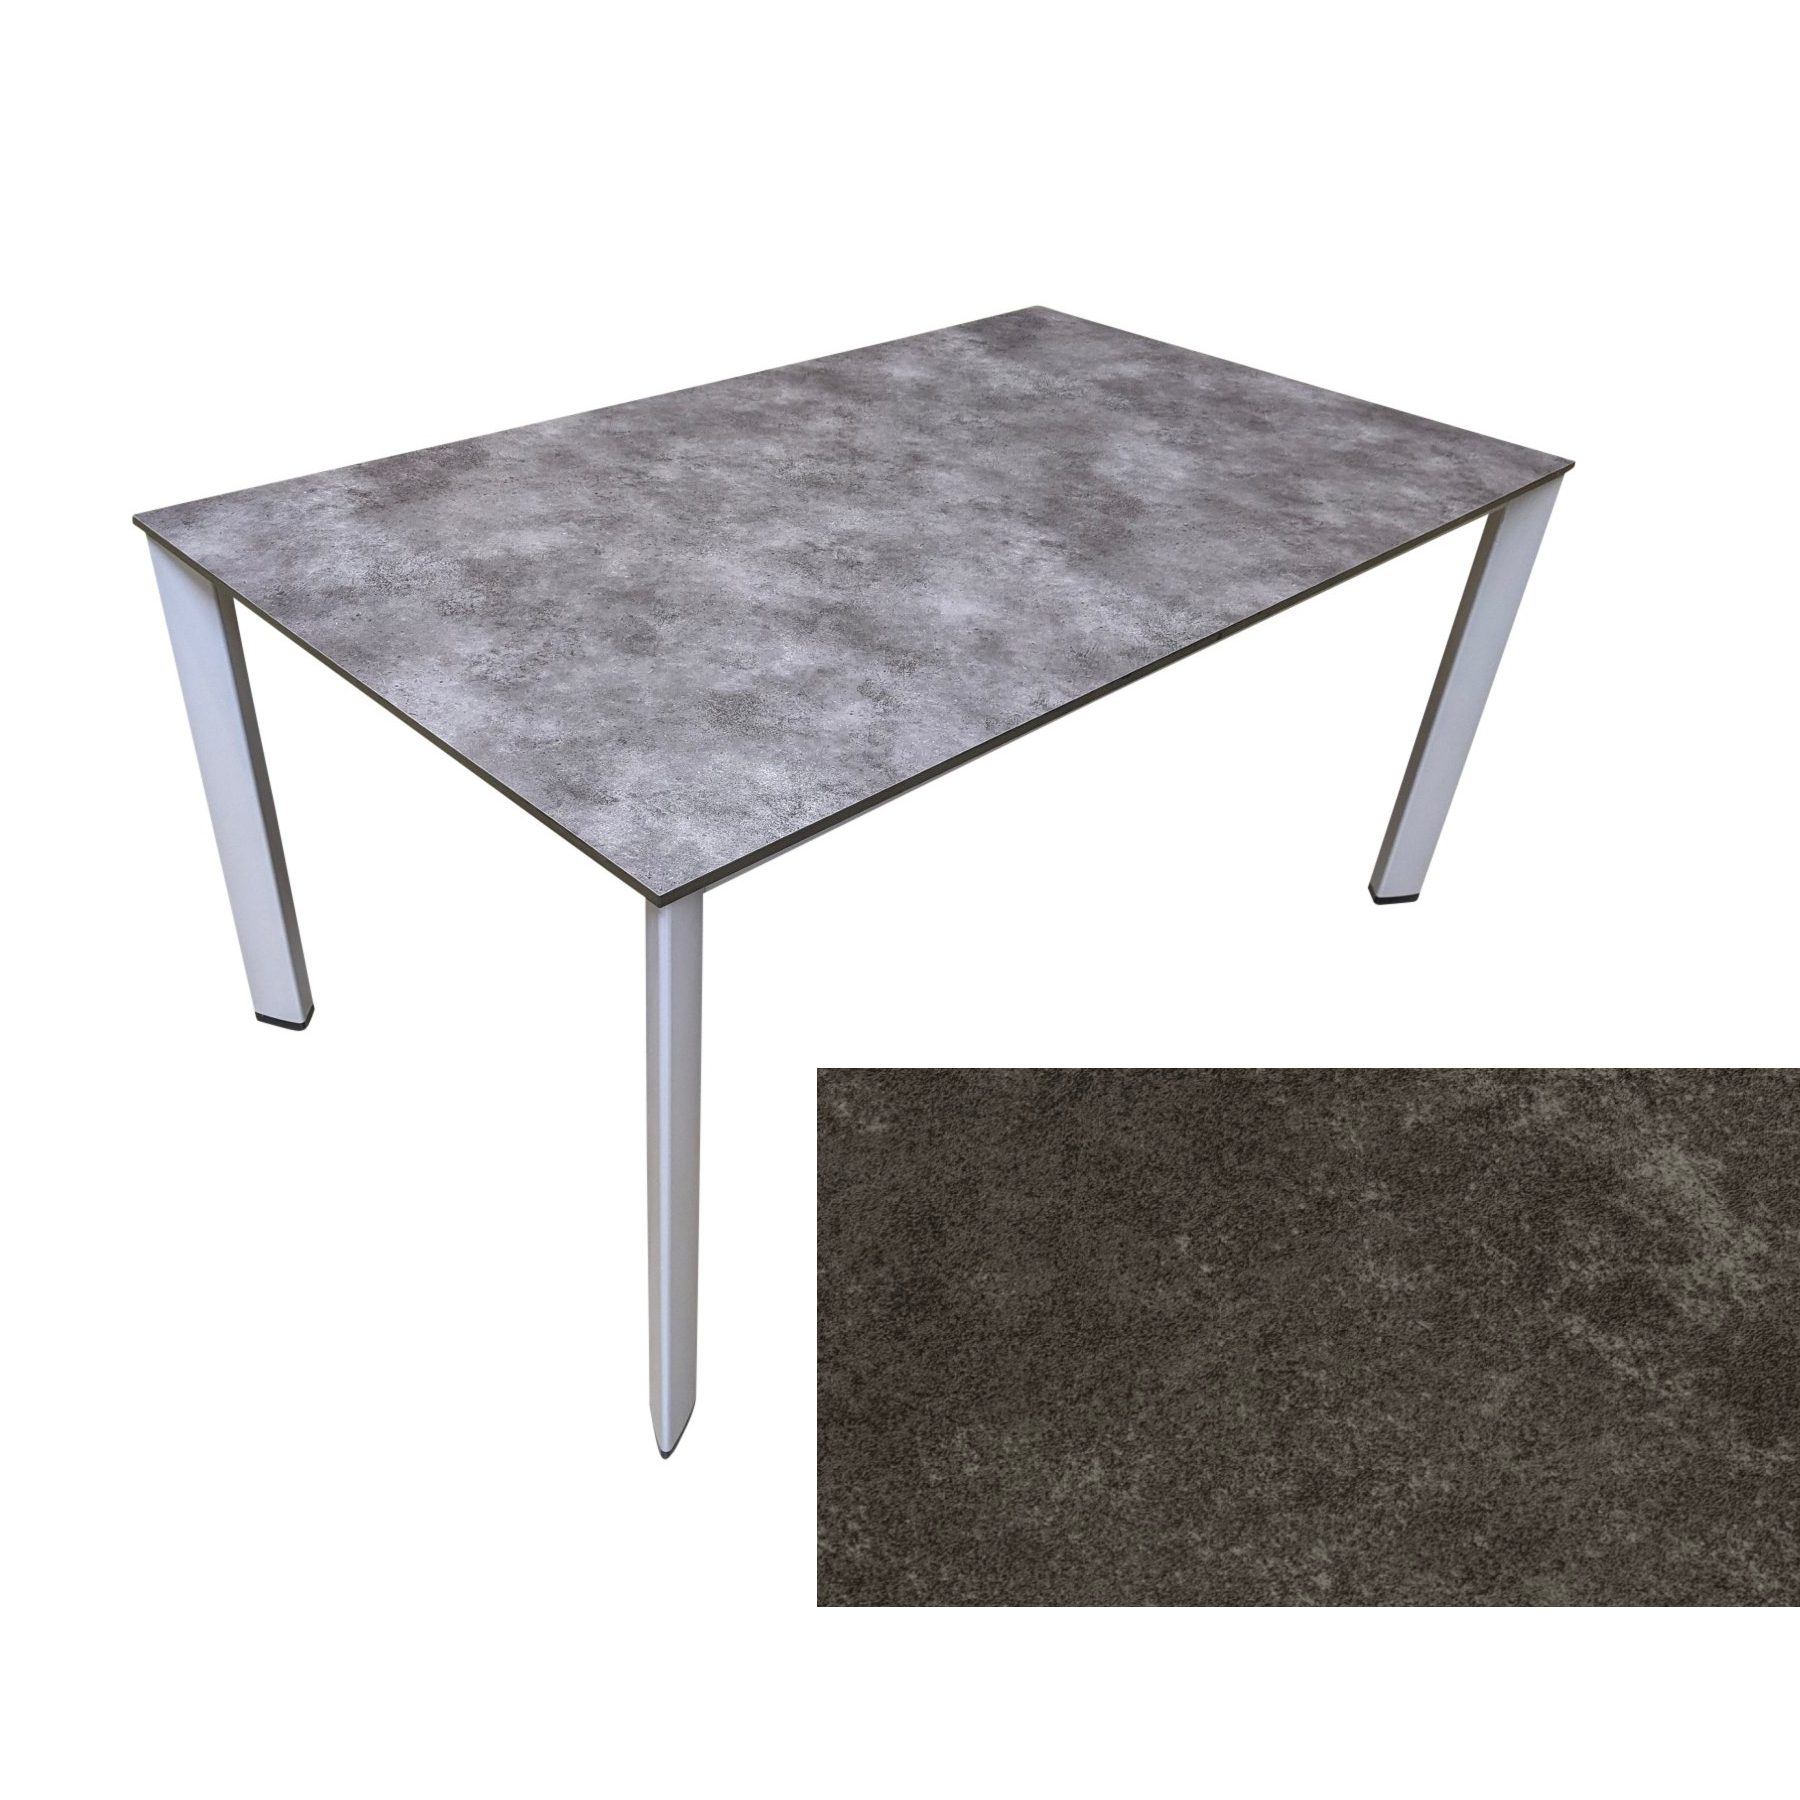 Kettler "Edge" Gartentisch, Gestell Aluminium silber, Tischplatte Keramik anthrazit, 160x95 cm